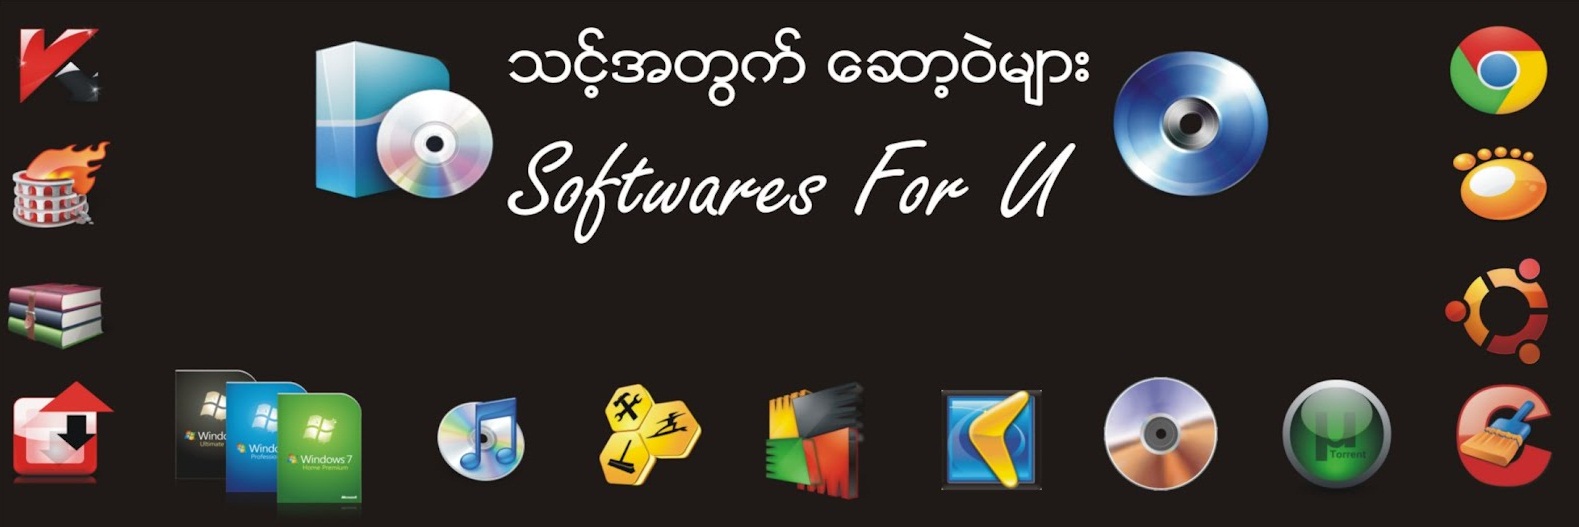 Softwares 4 U - Download full softwares for Everyone!